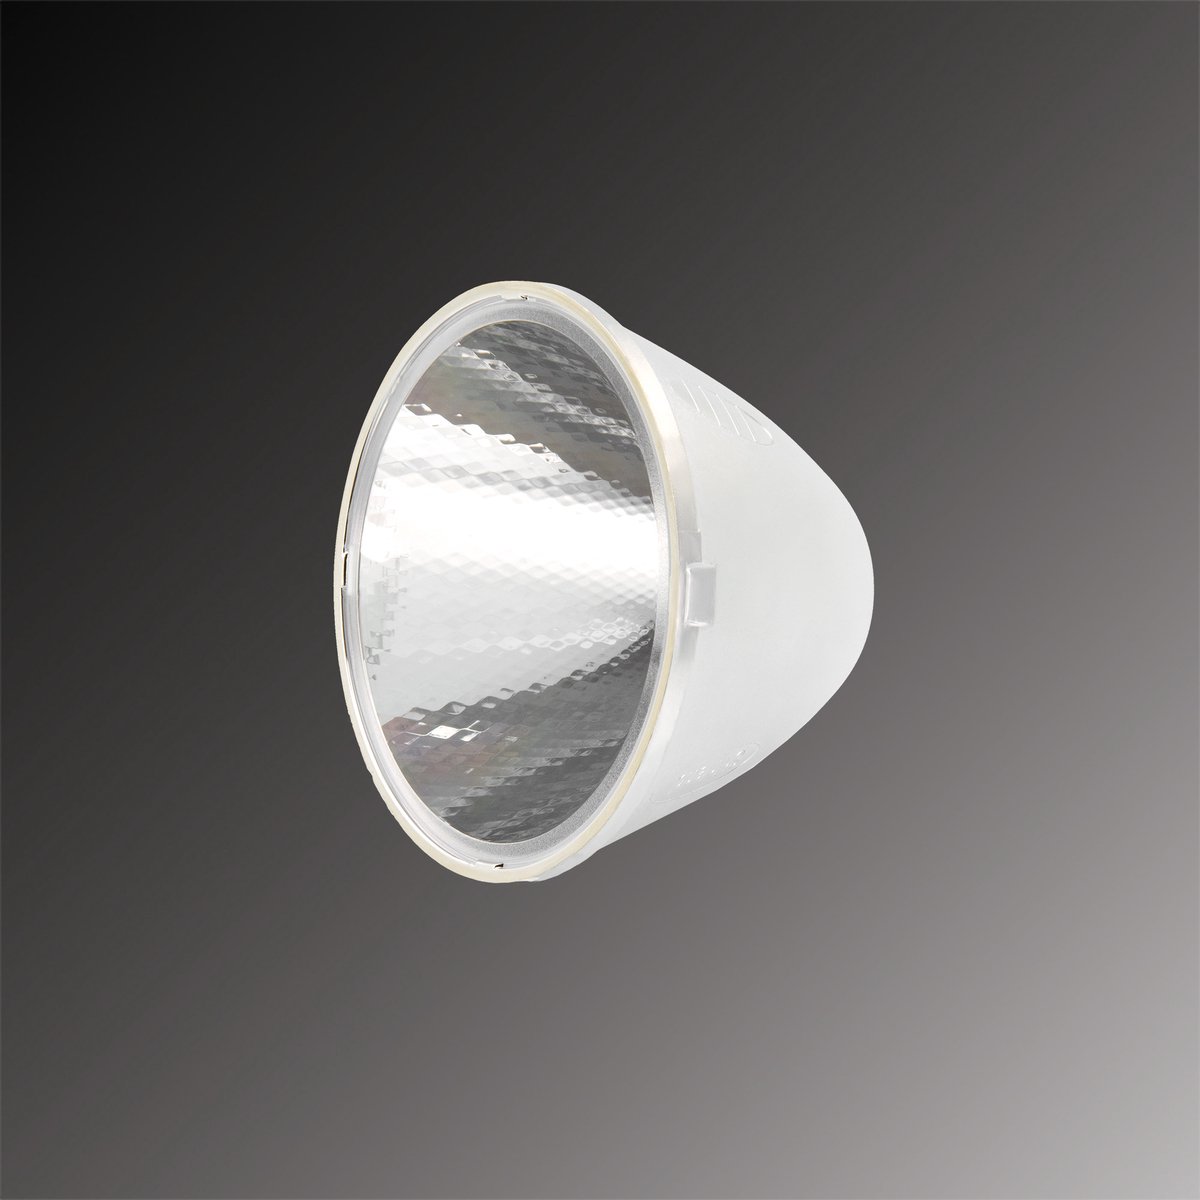 Verbatim Spot Reflector 20° for LED Track Light 35W